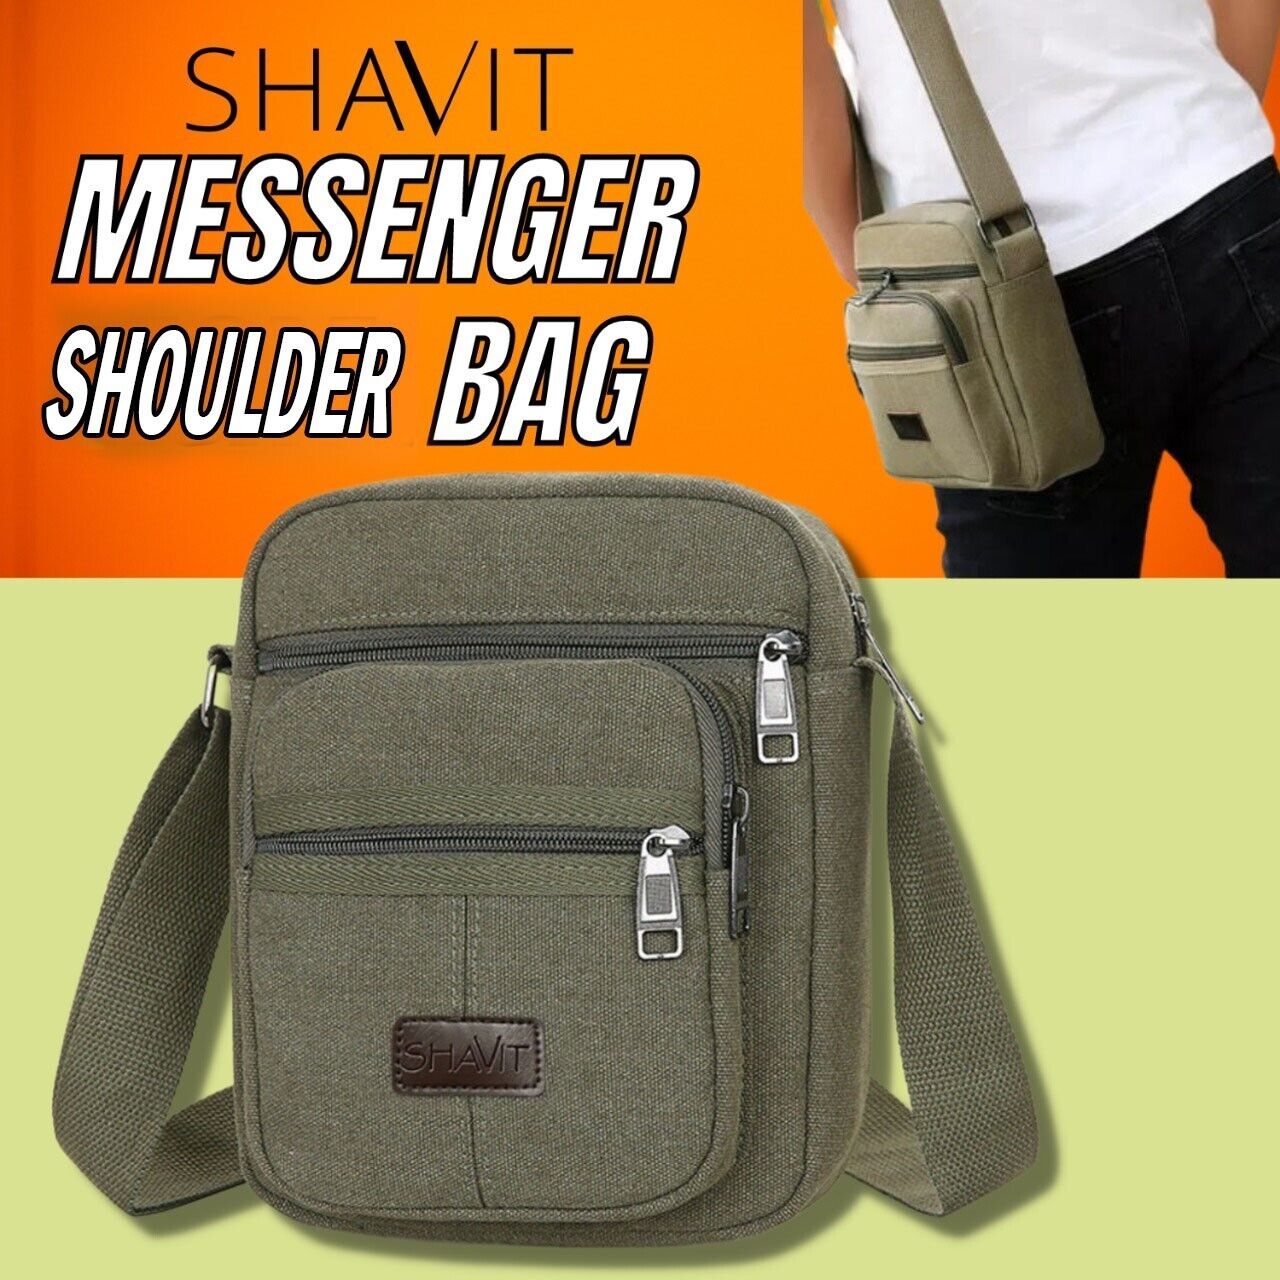 Men's Cross Body Bag Messenger Shoulder Book Bags School Casual Sport Work Bag Modern Lifestyle Shopping